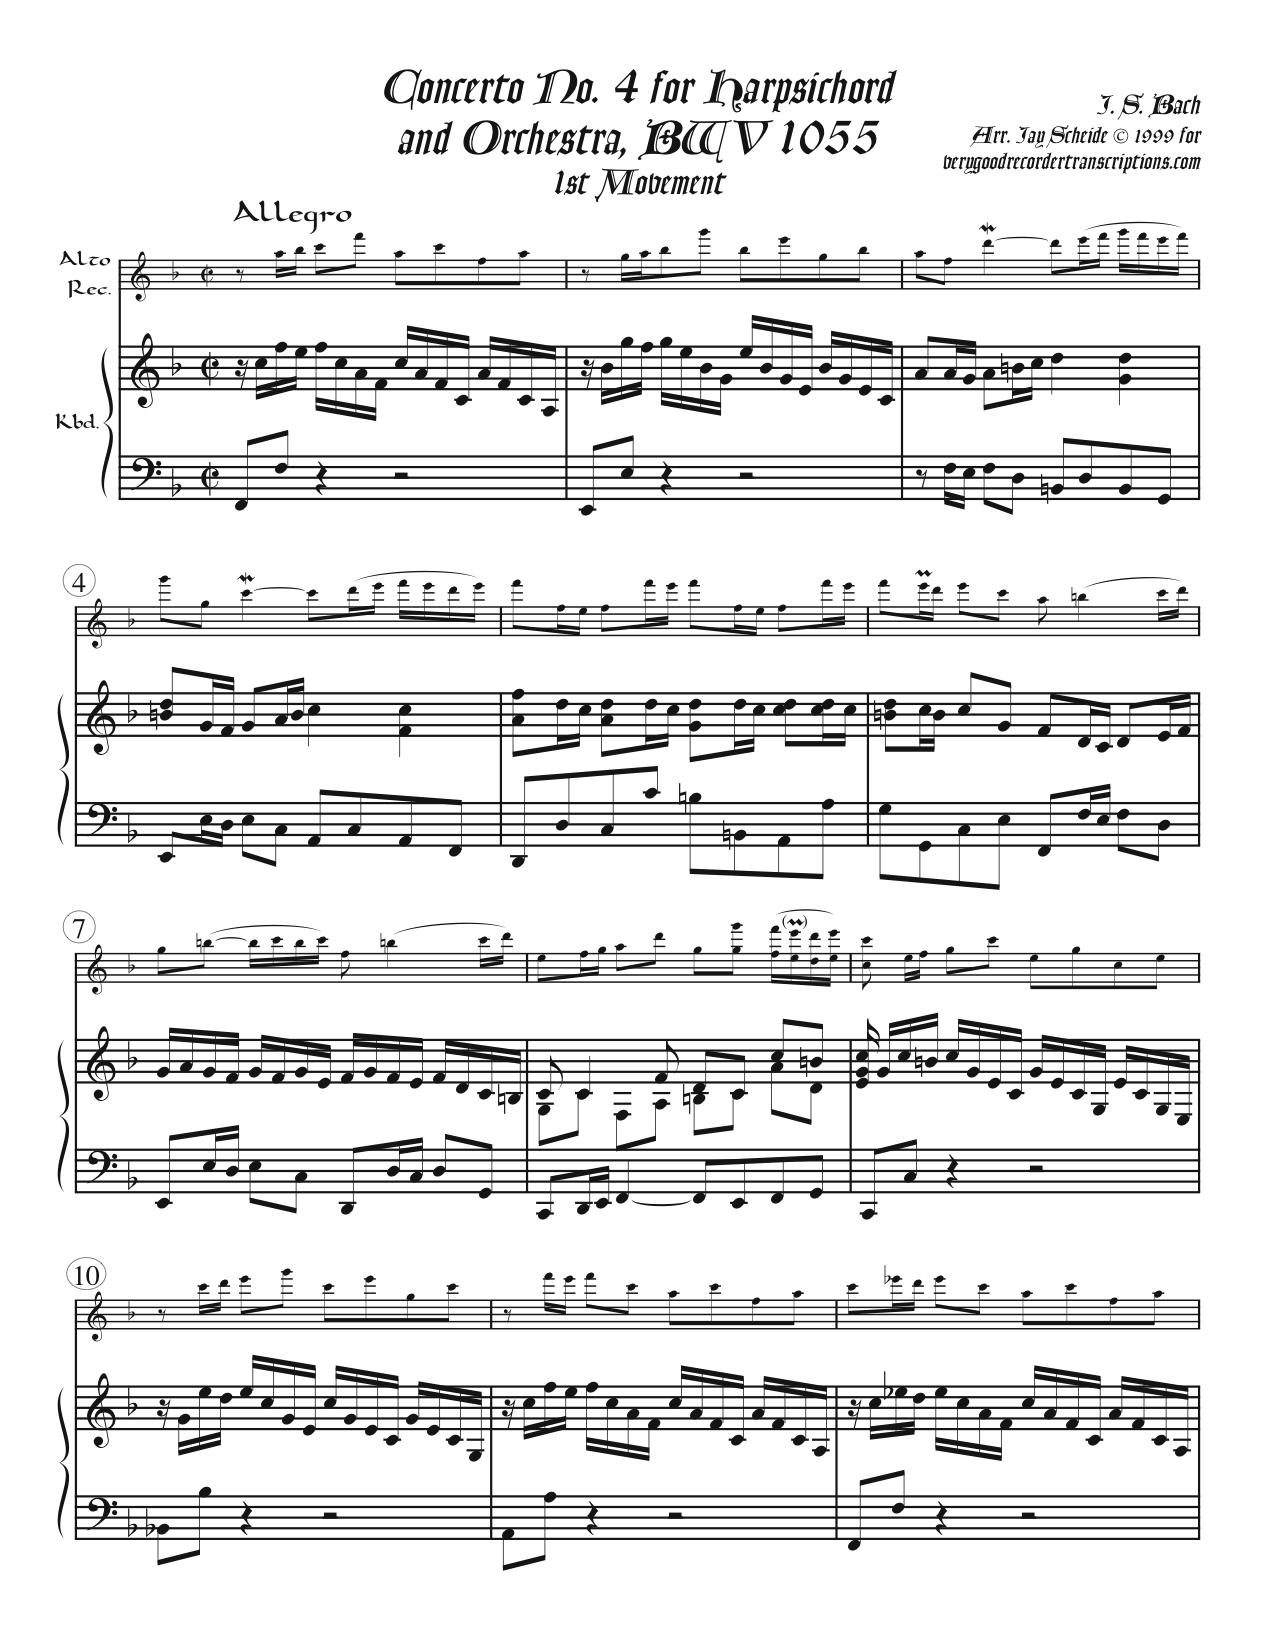 Concerto No. 4, BWV 1055